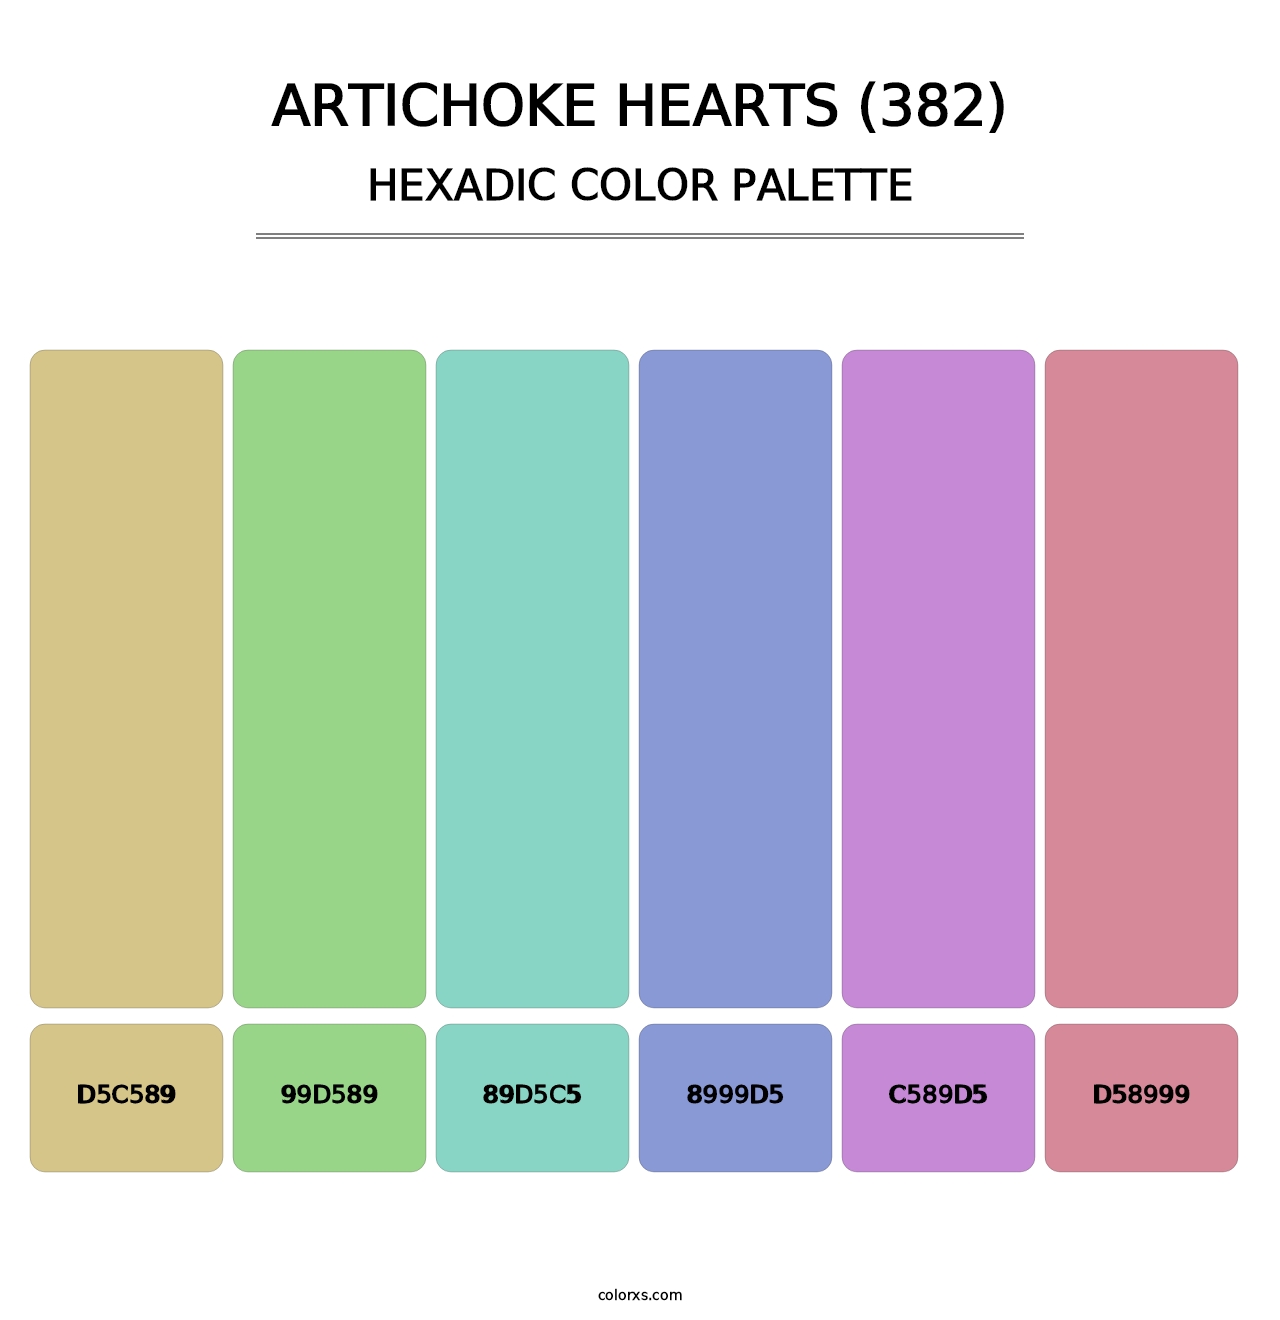 Artichoke Hearts (382) - Hexadic Color Palette